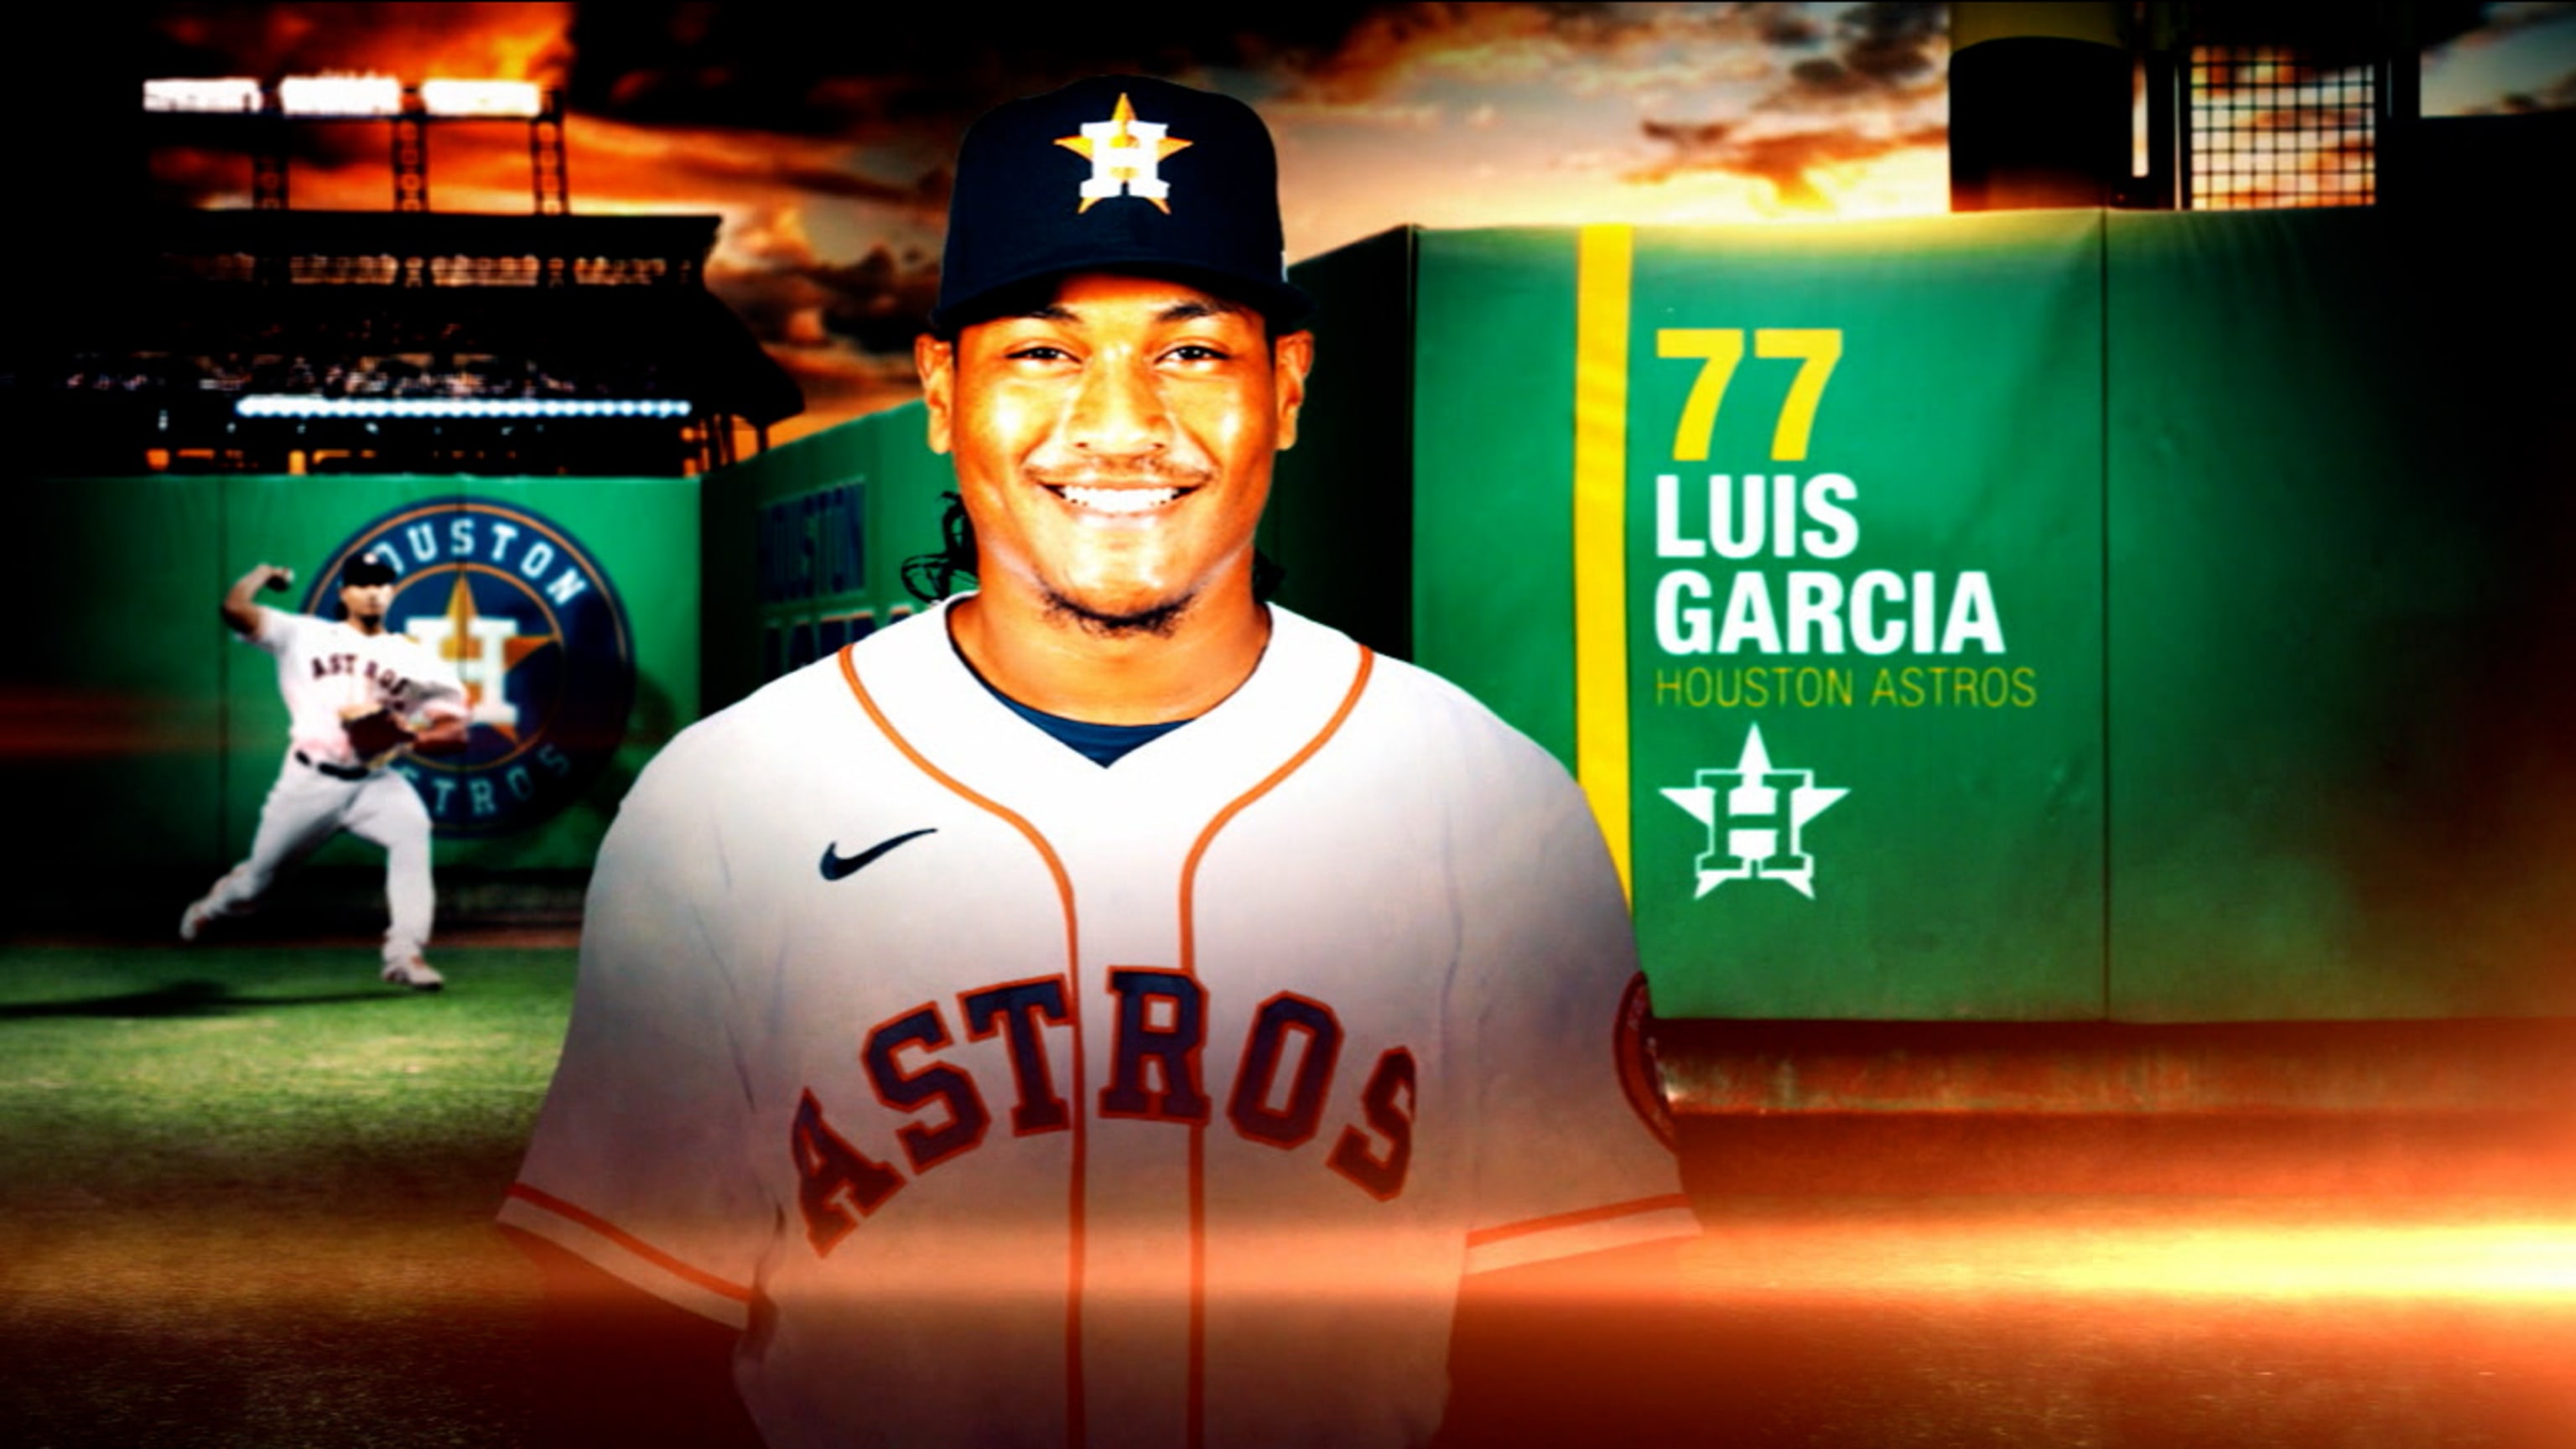 Luis Garcia to start World Series Game 3 for Astros